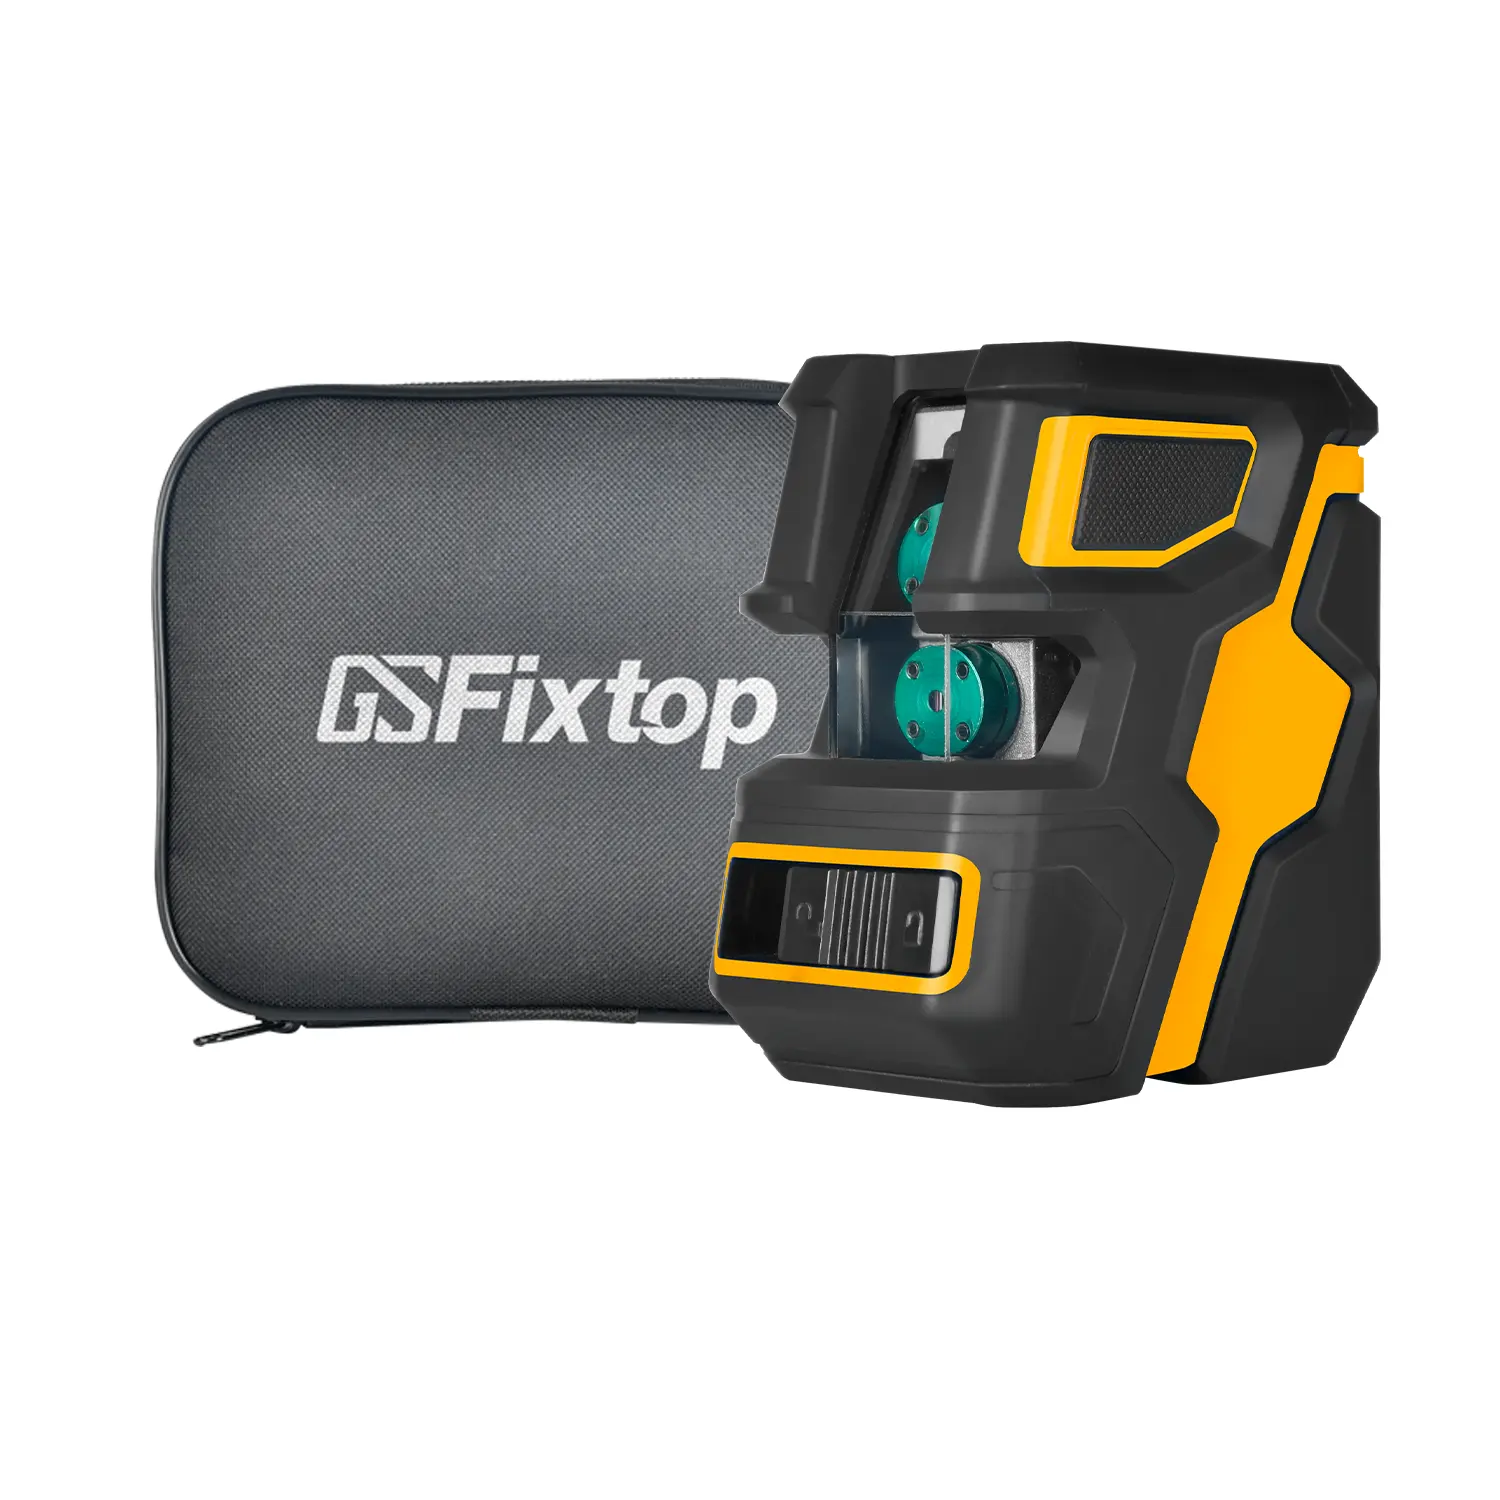 GSFIXTOP 측정 도구 제조 업체 판매 농업 토지 야외 벽 마운트 레이저 레벨 12 라인 3d 셀프 레벨링 360